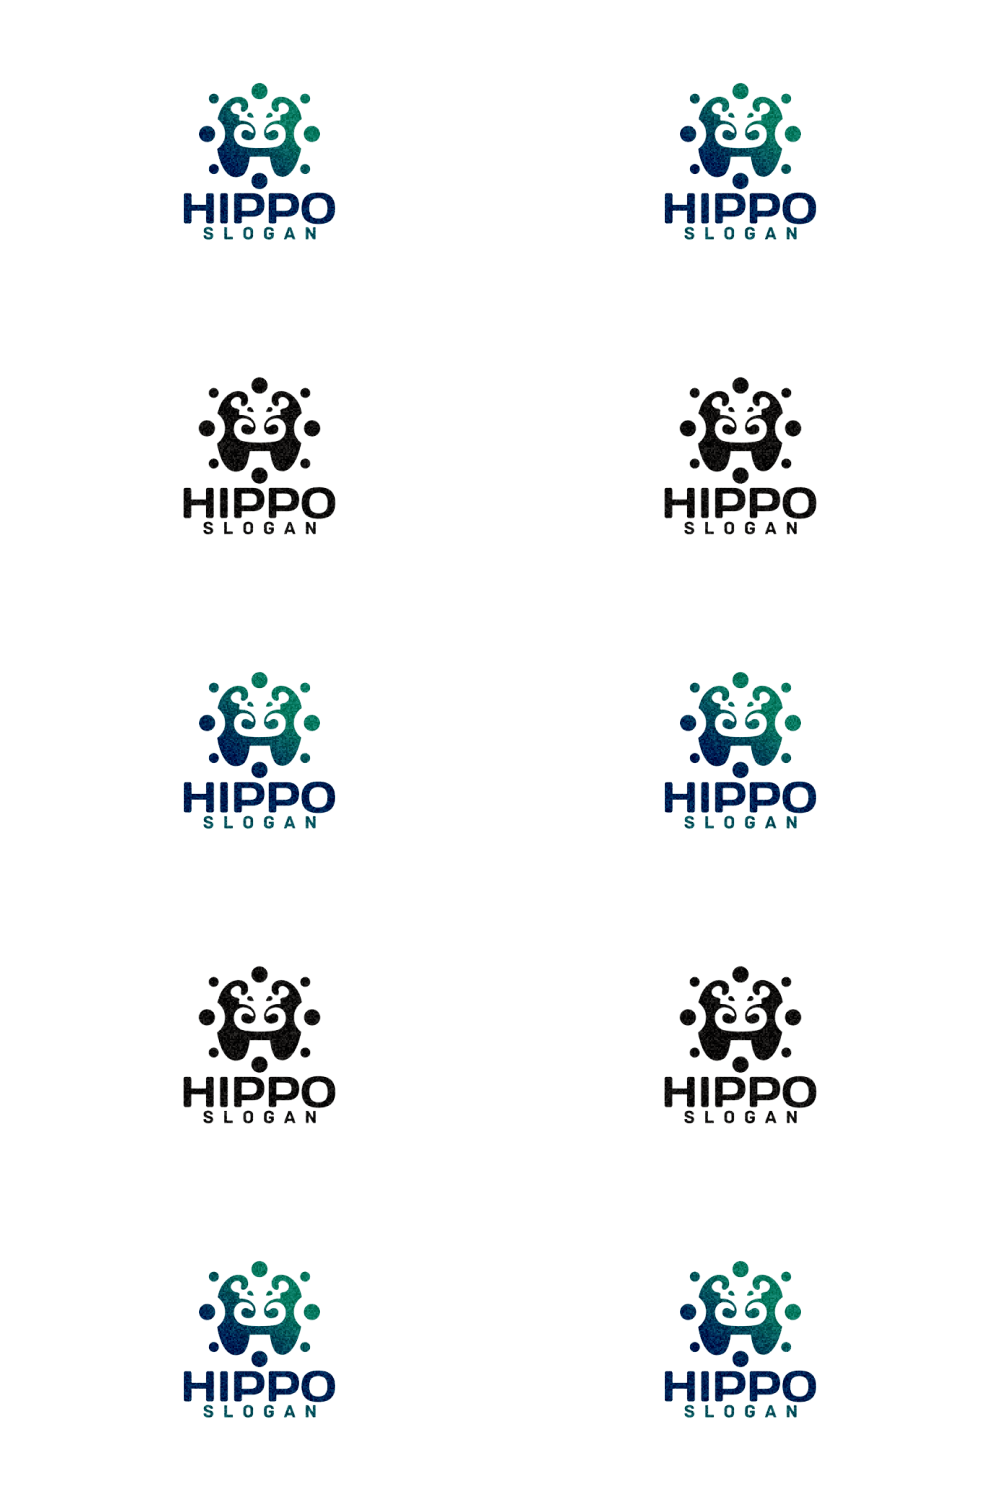 Hippo purpule circle logo.